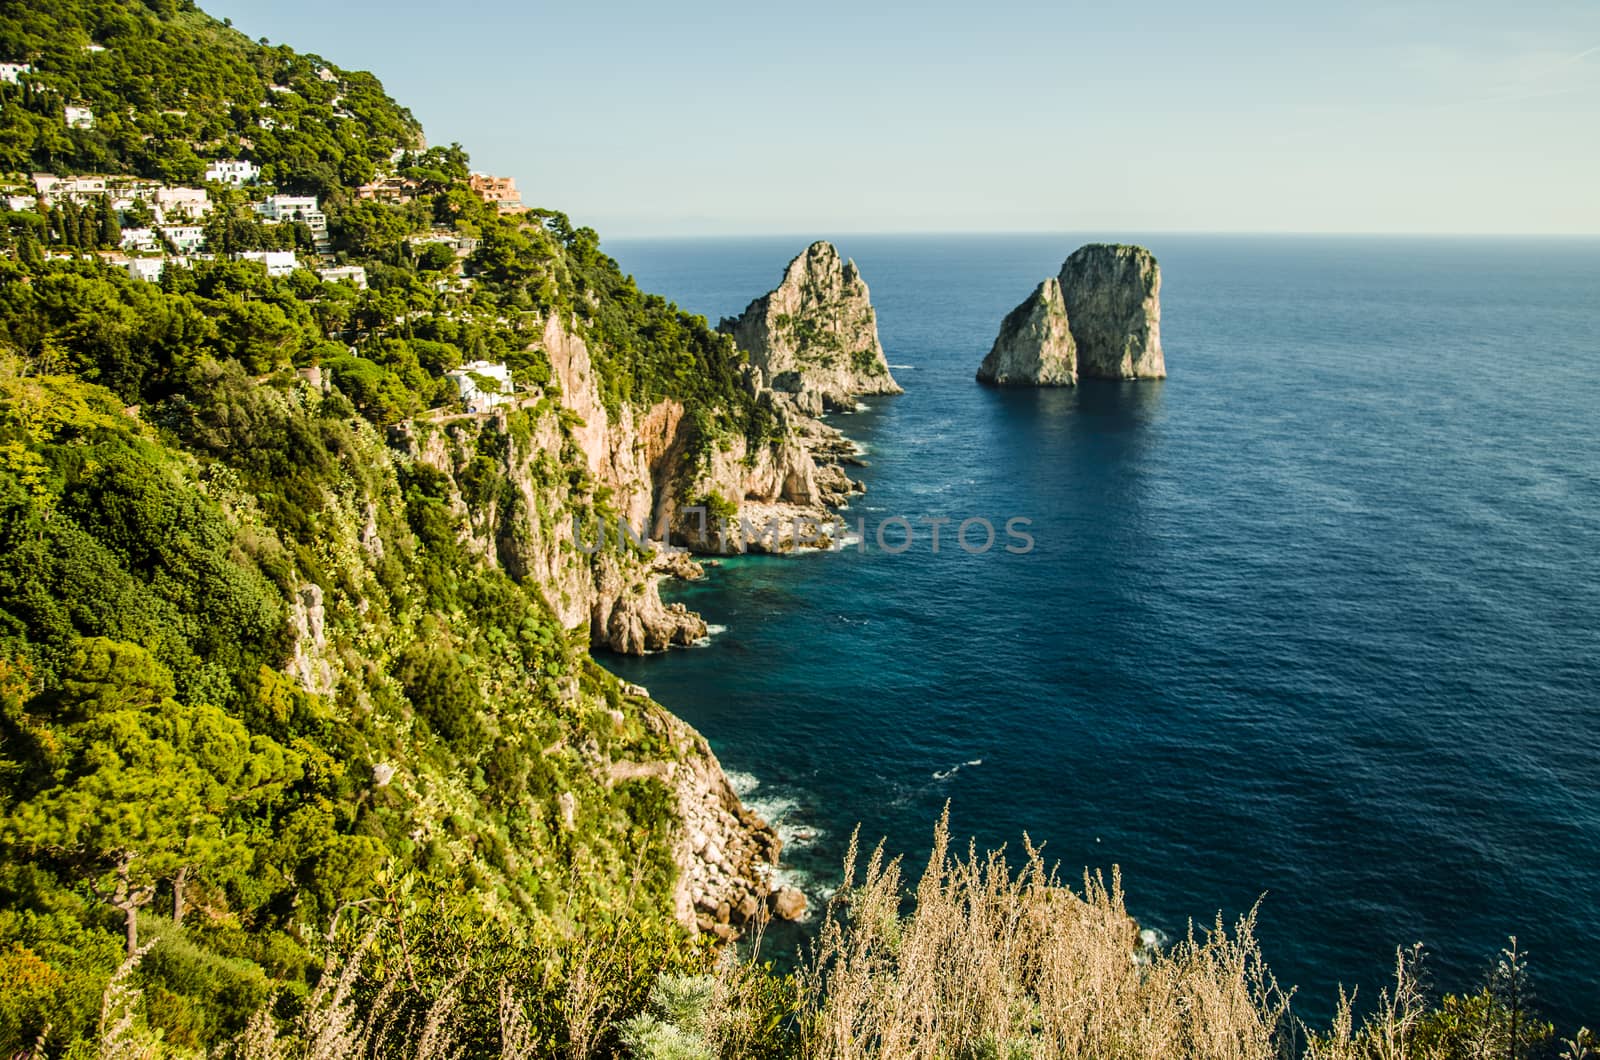 The Mediterranean sea on the Italian coast of the island of capri with its "faraglioni".